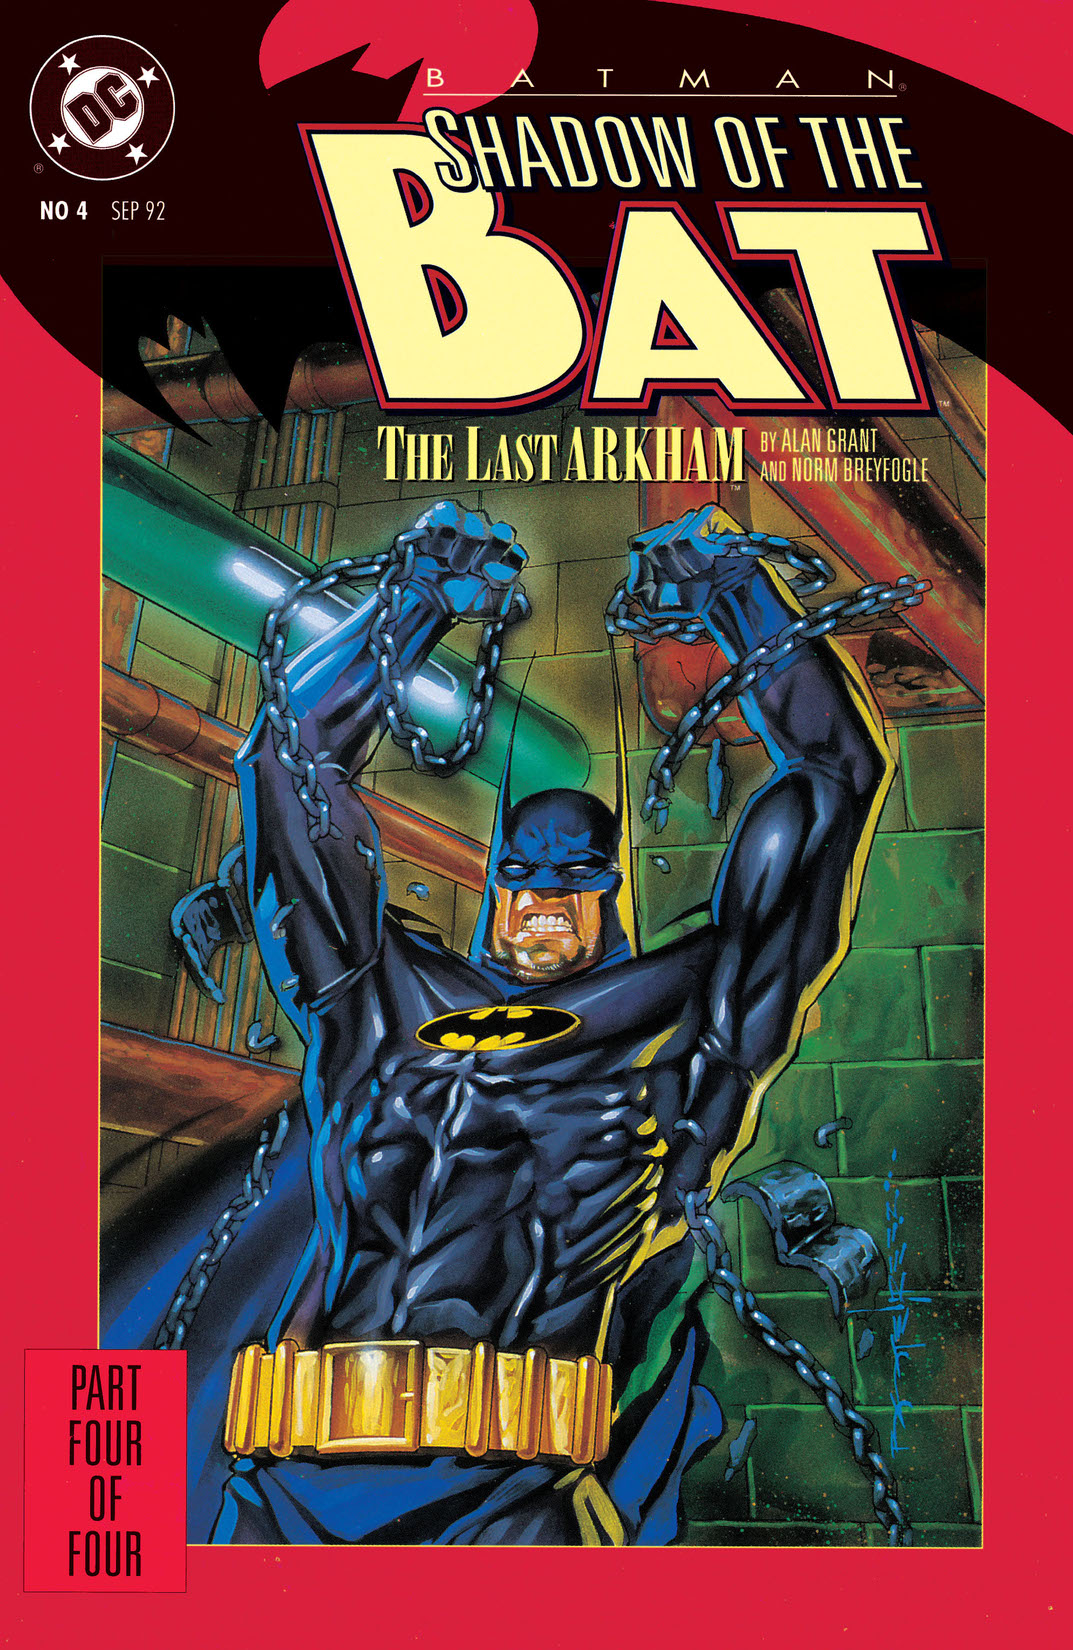 Batman: Shadow of the Bat #4 preview images